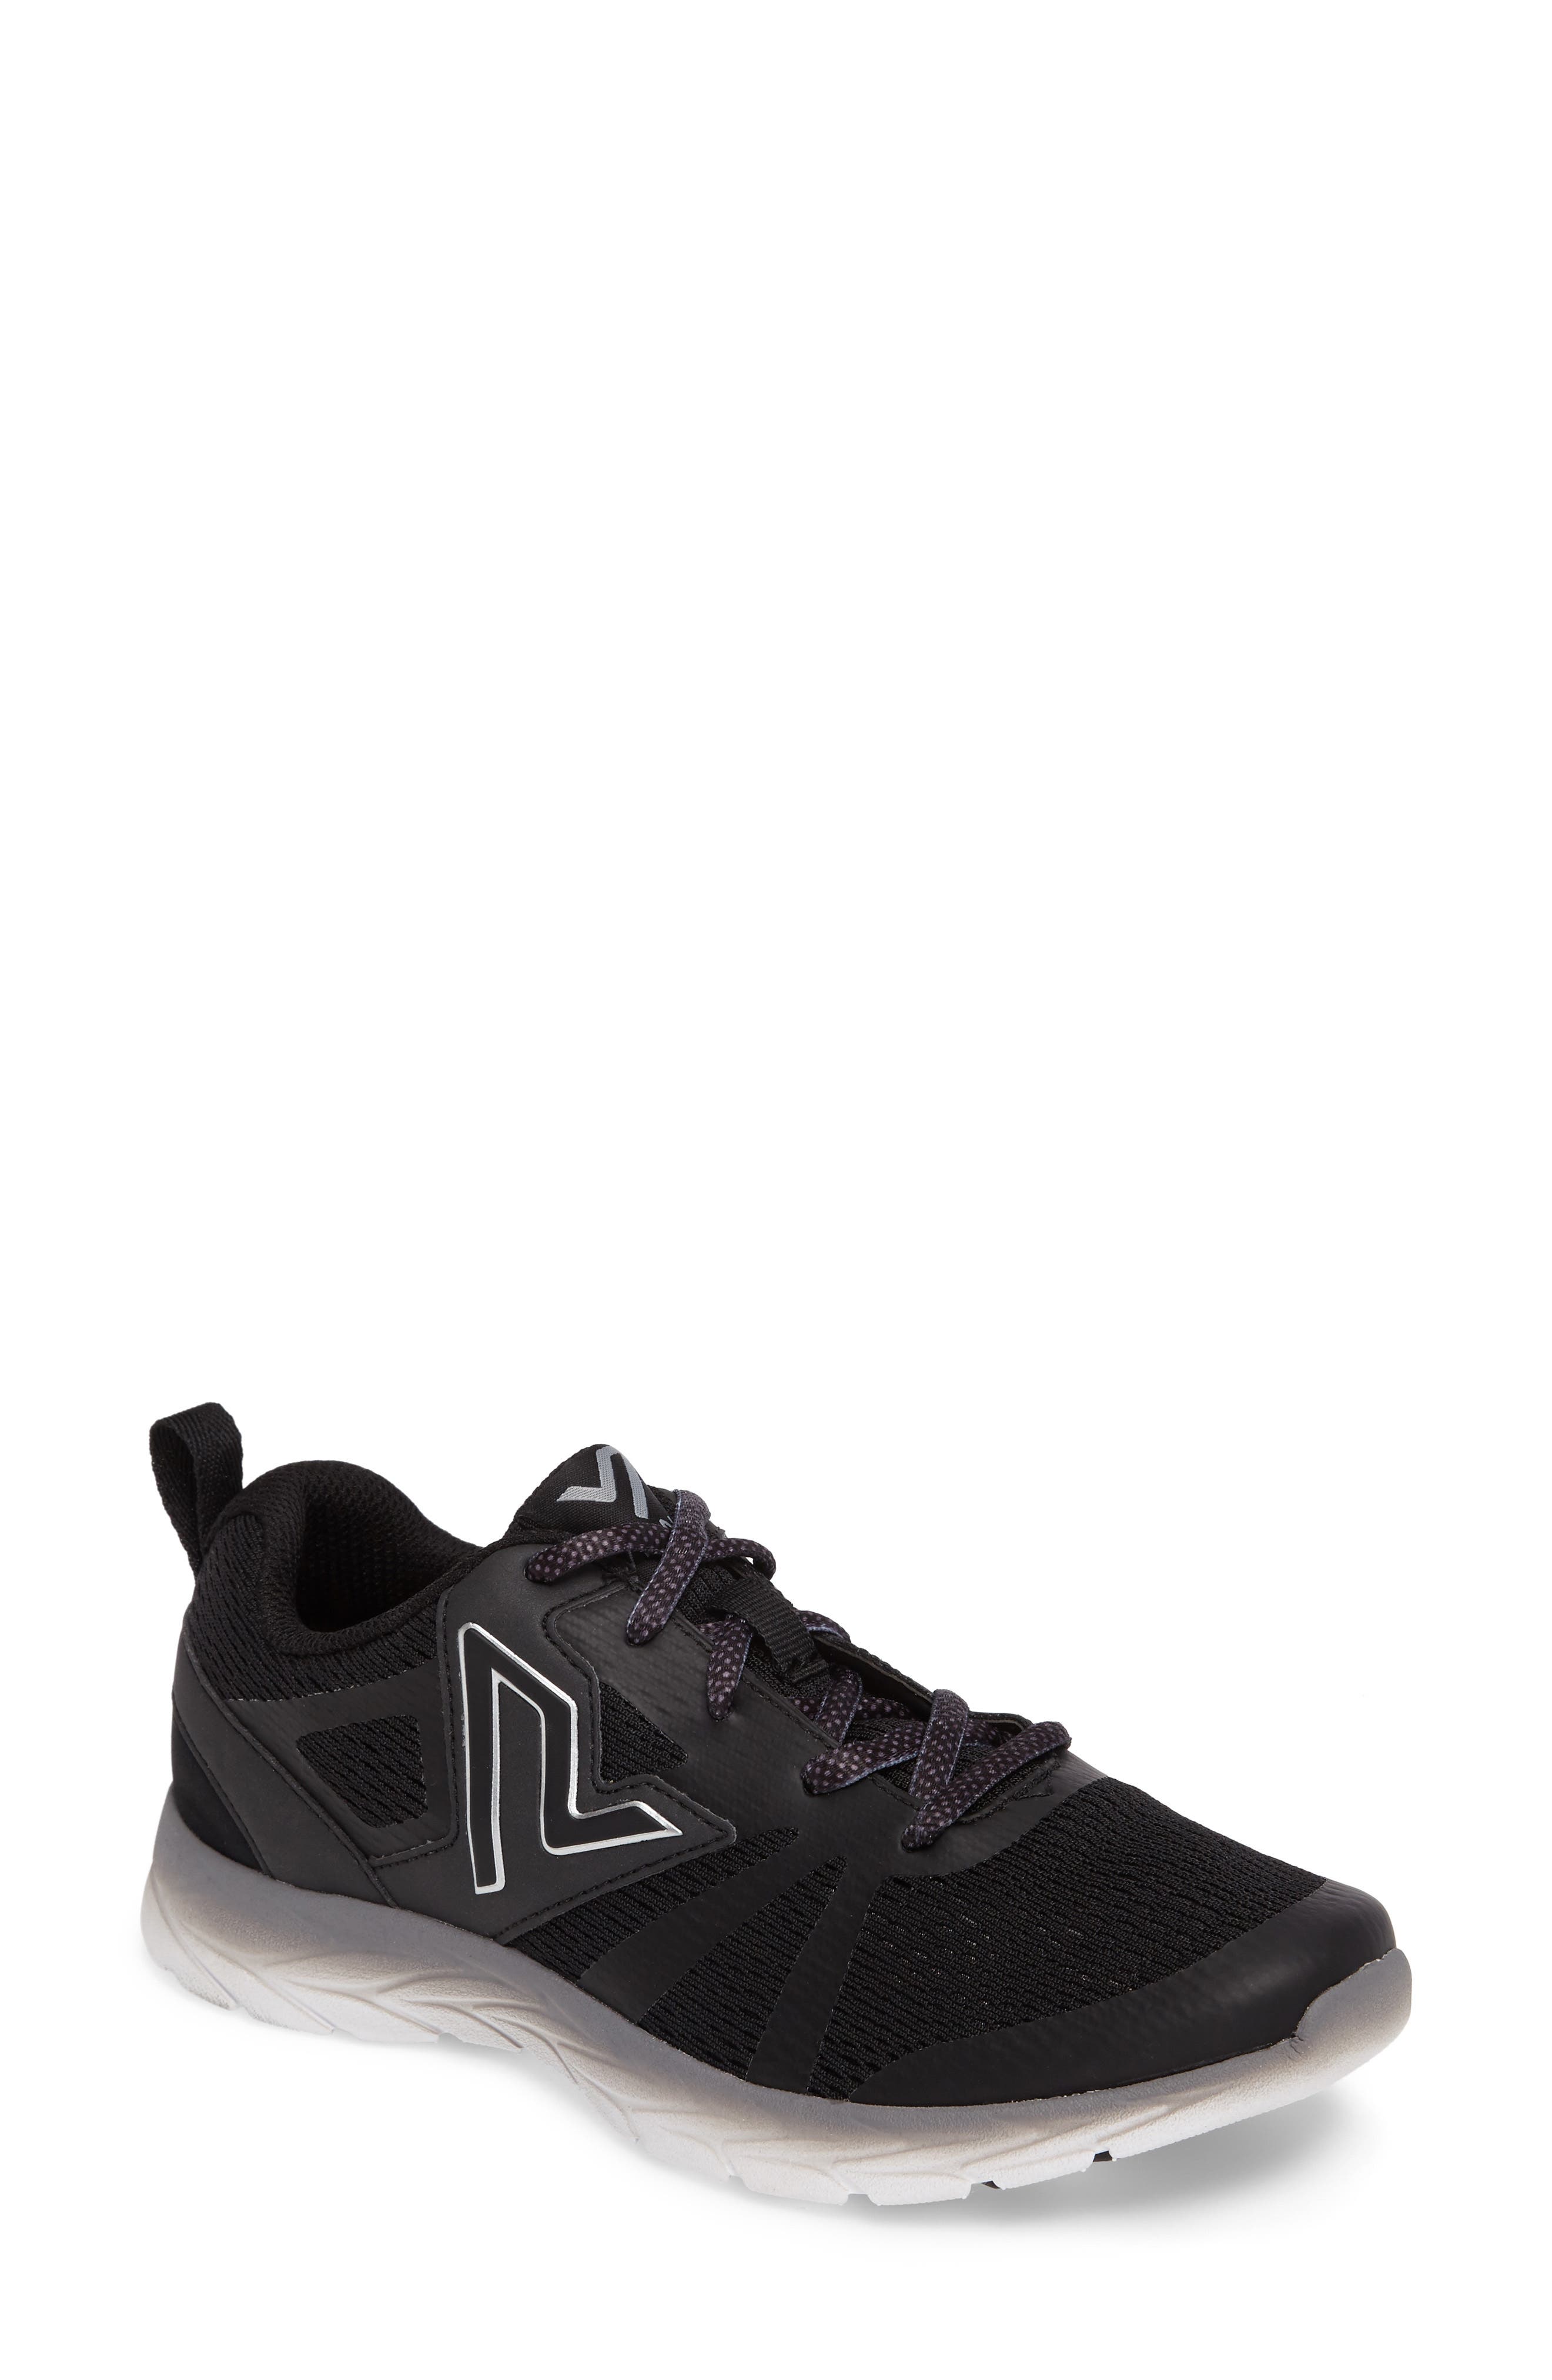 vionic black tennis shoes